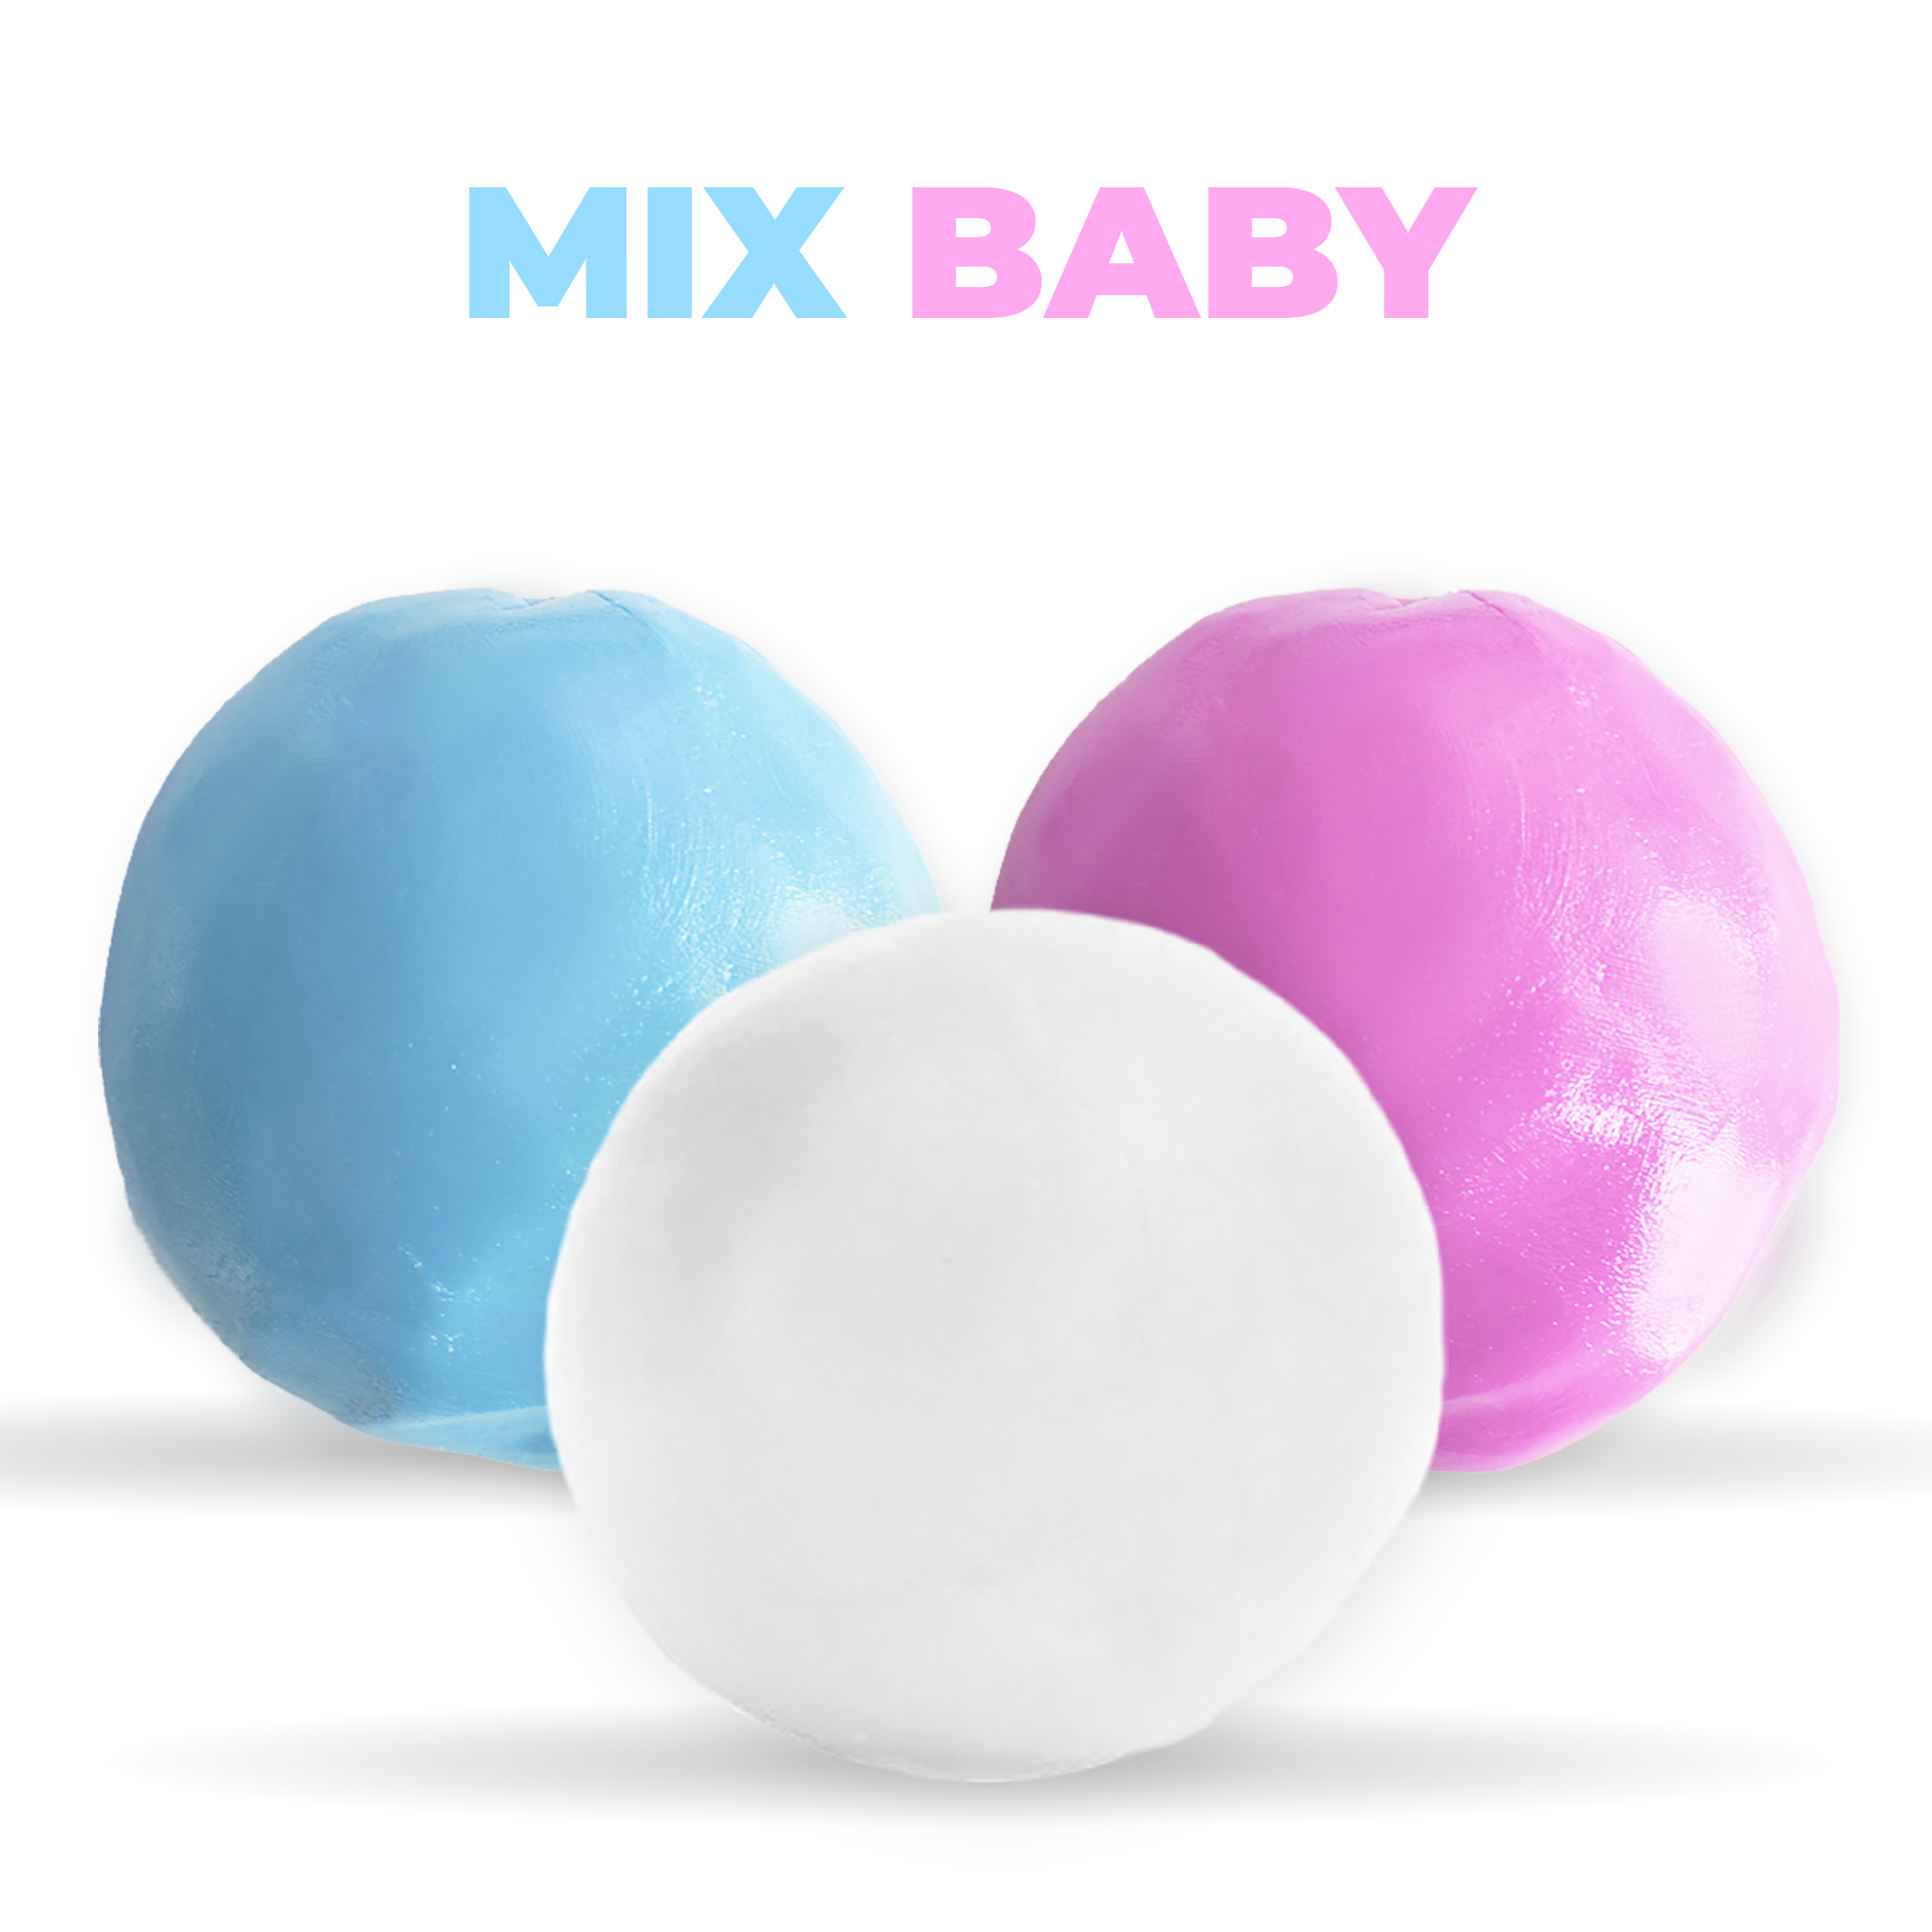 Fondant Mix Baby